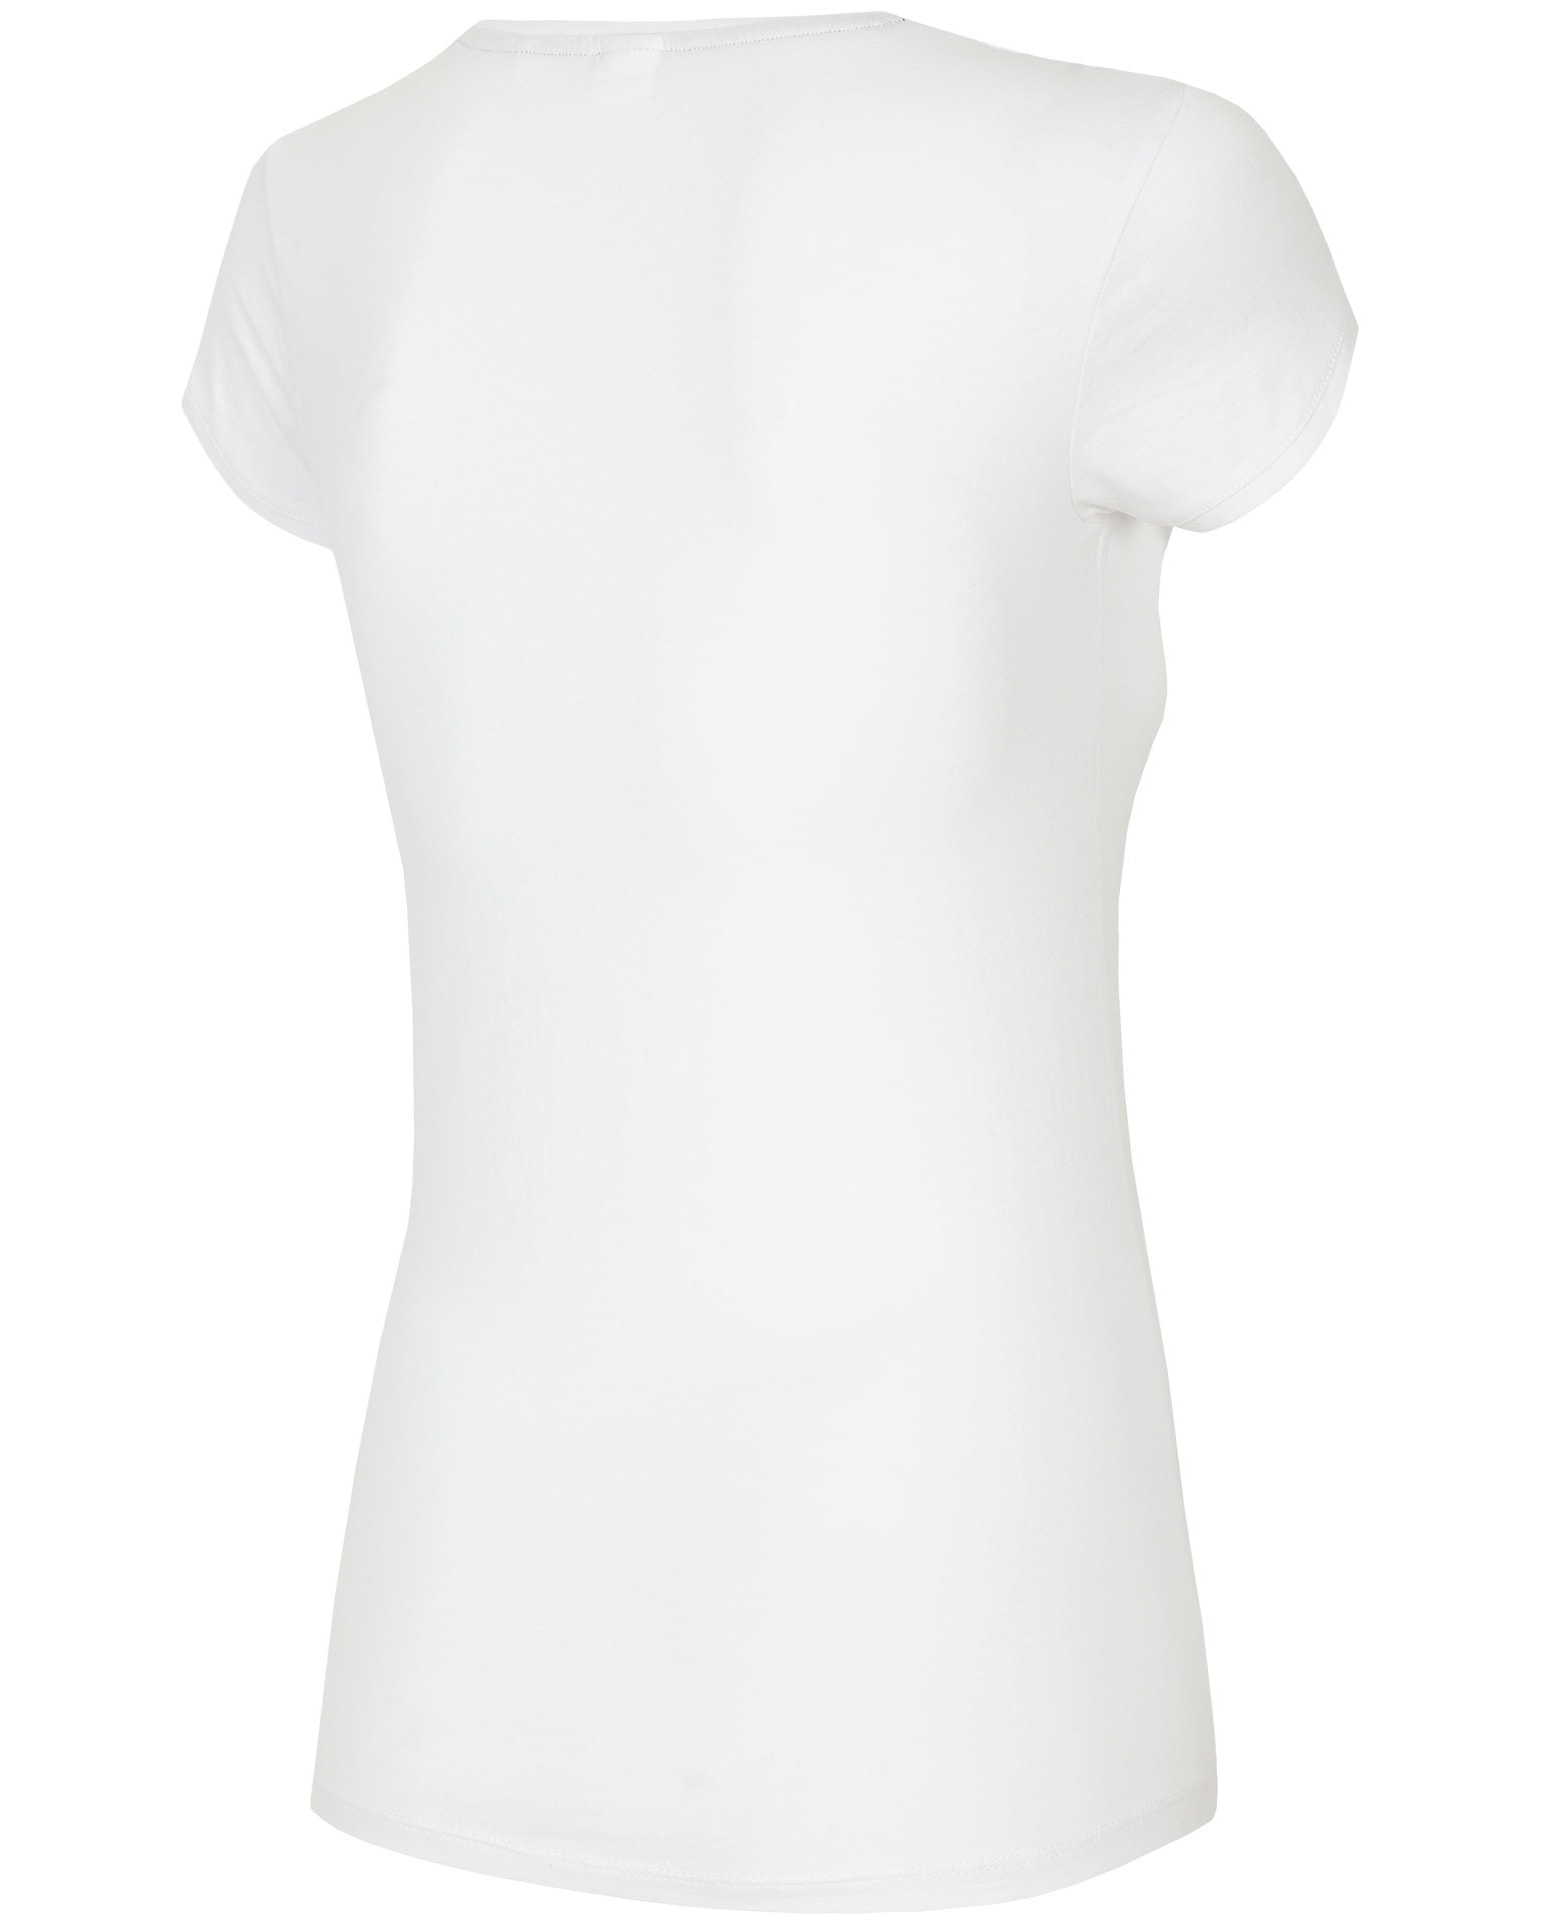 4F Women's T-Shirt - White